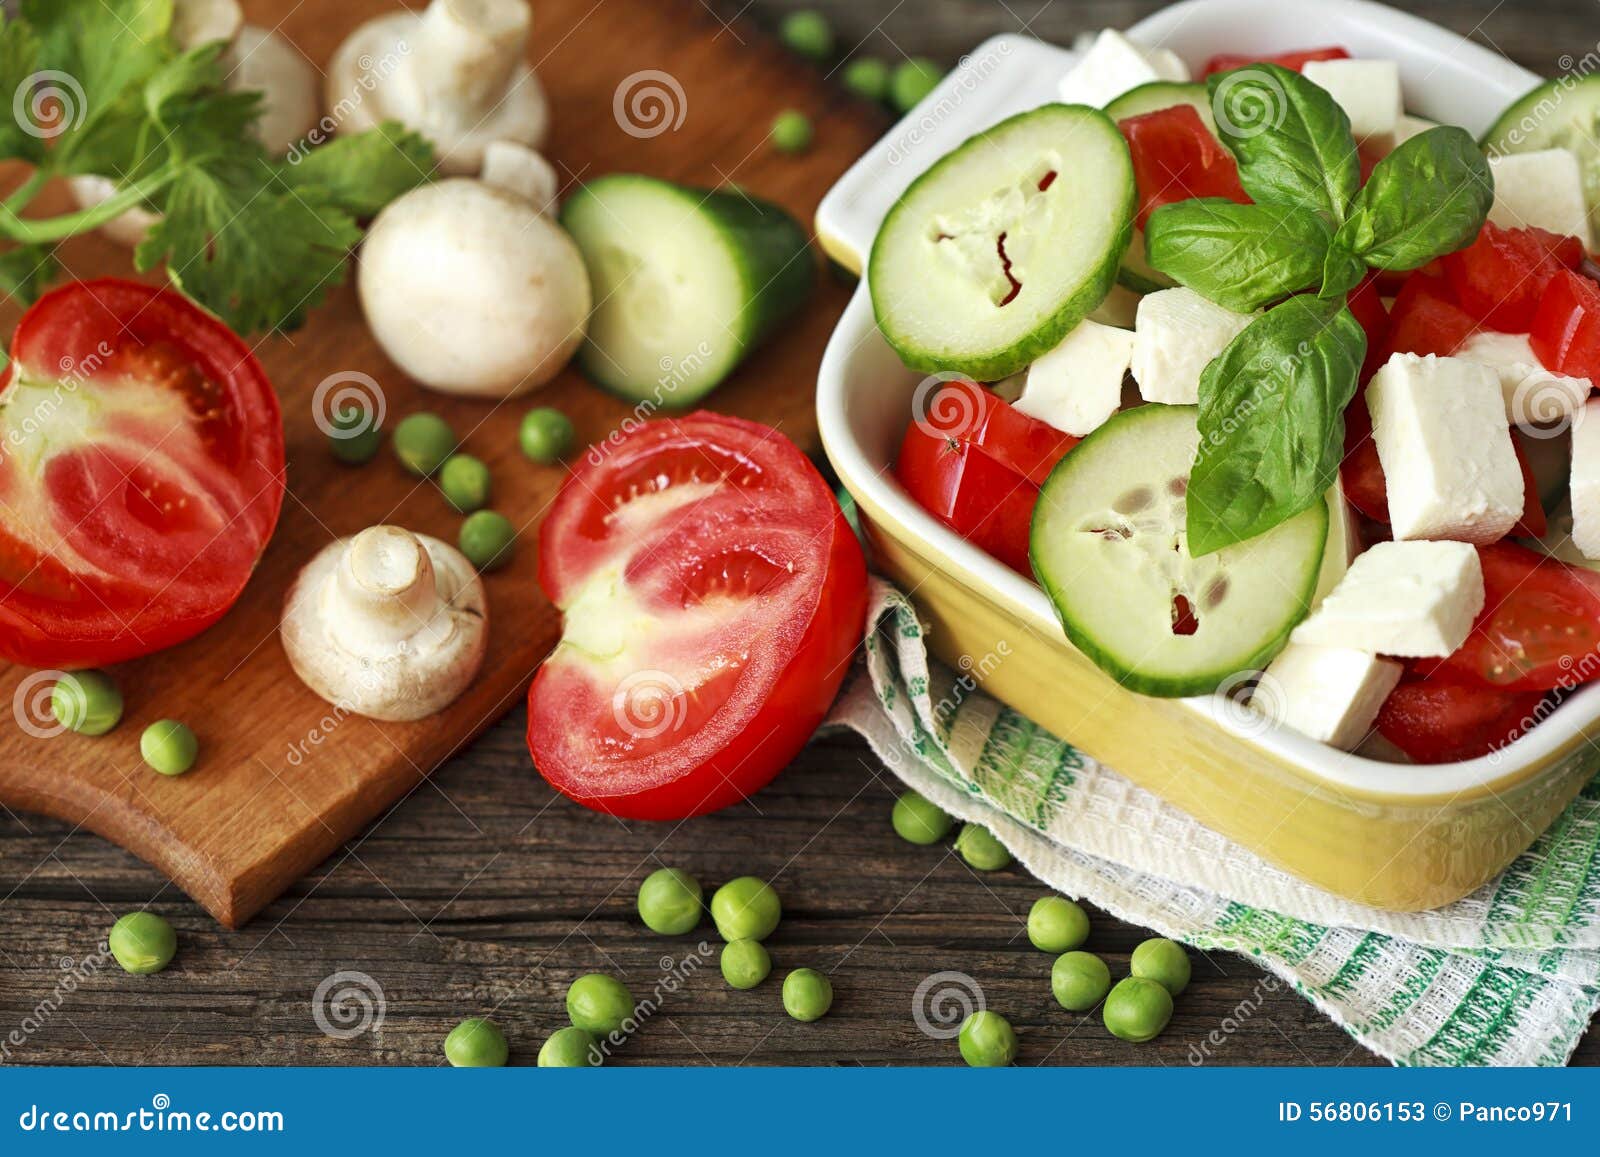 Fresh seasonal salad stock image. Image of fork, seasonal - 56806153